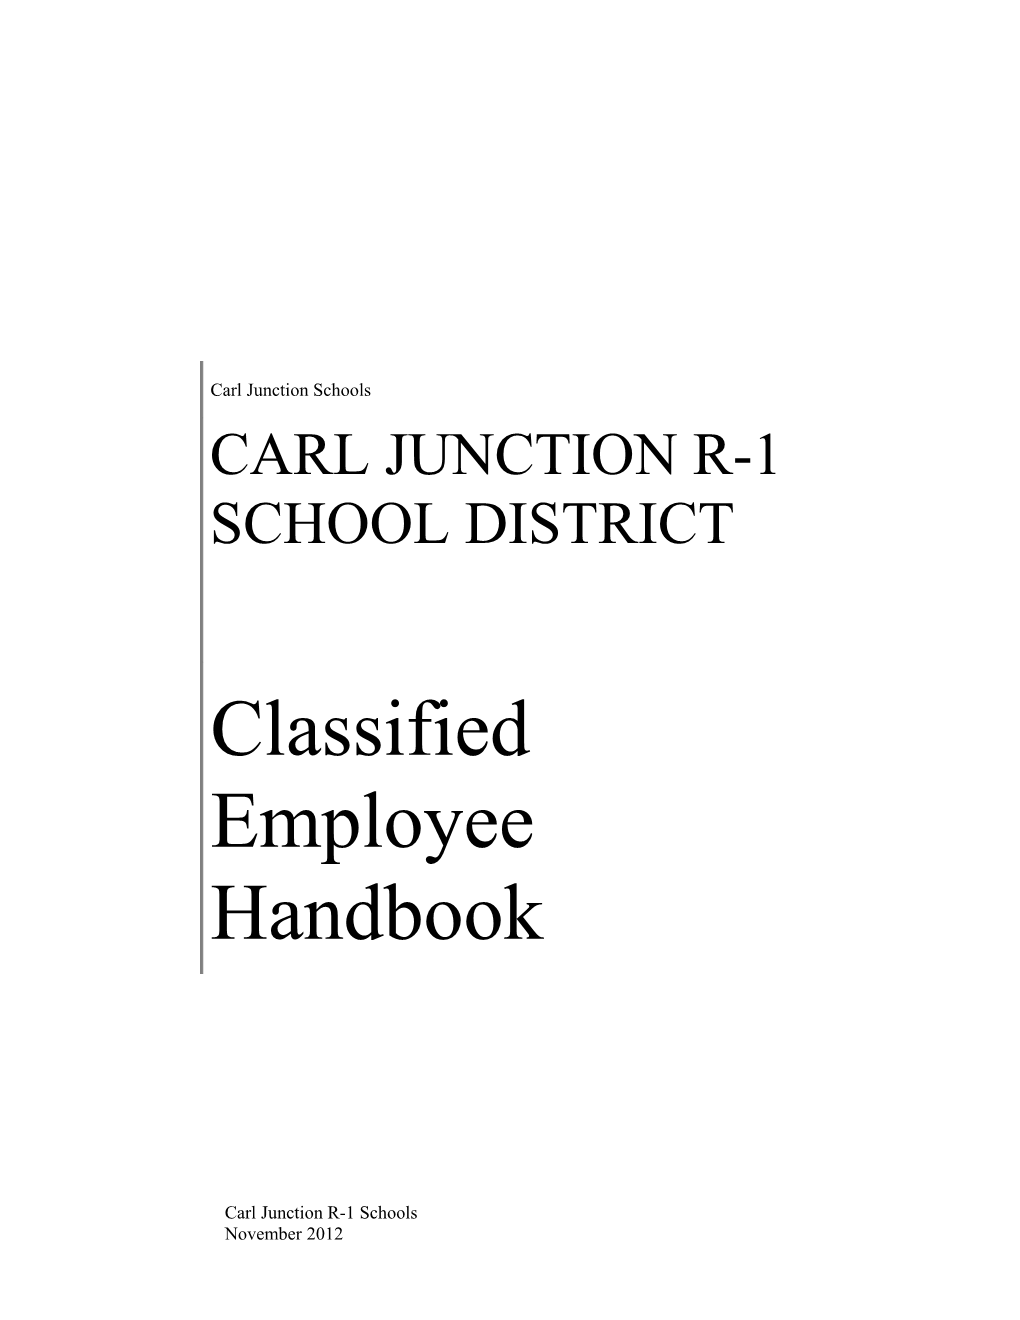 Carl Junction R-1 School District s1